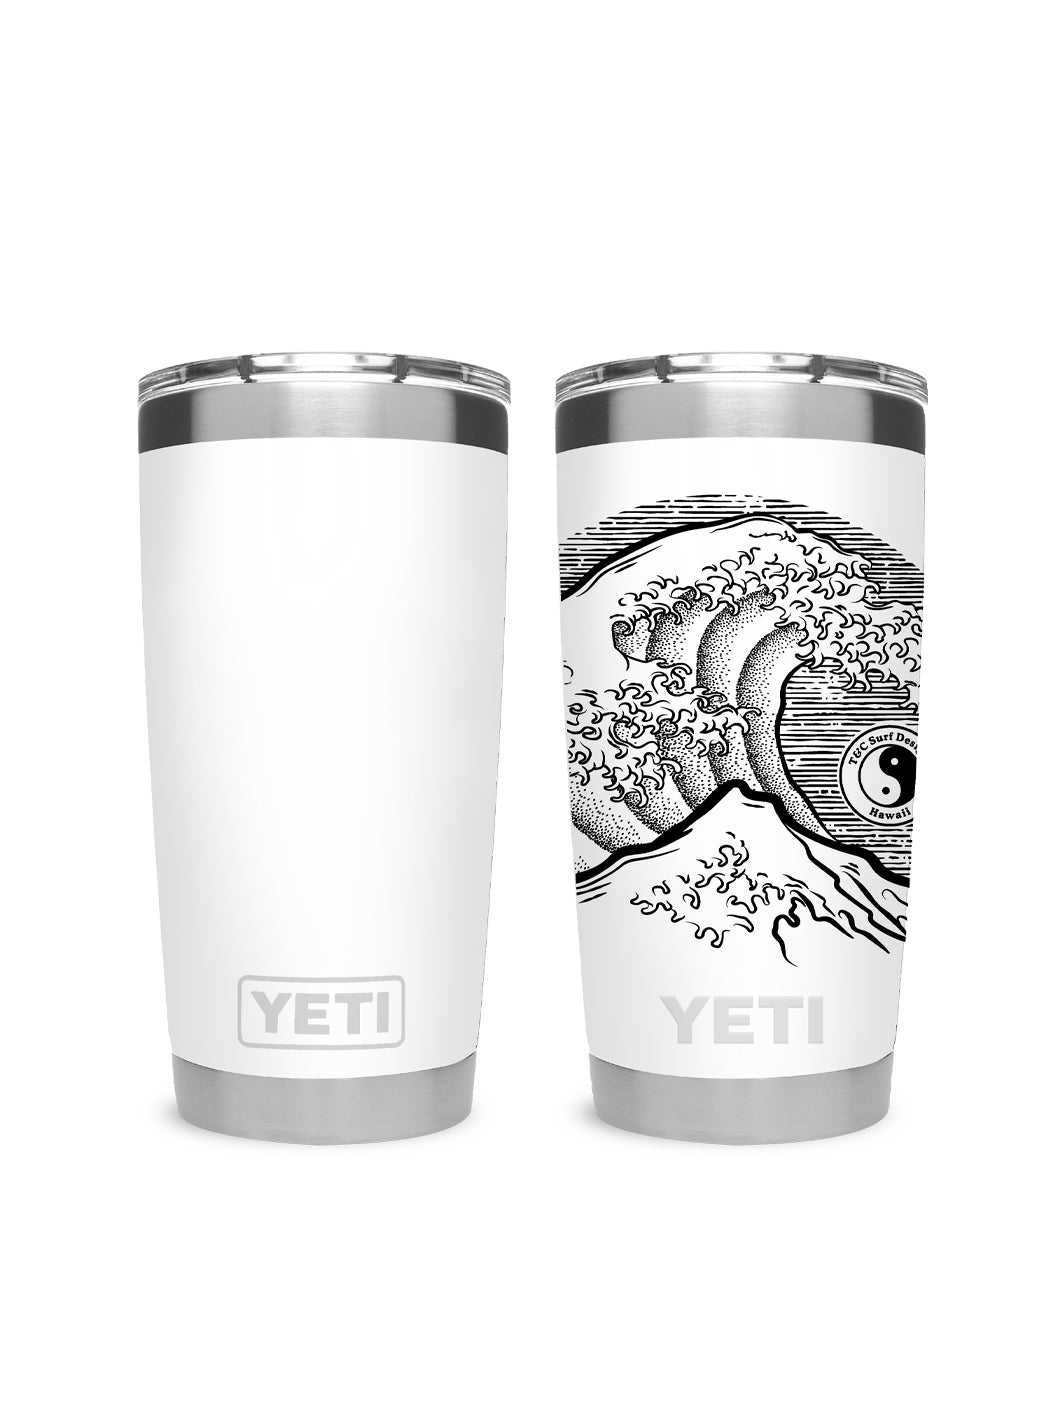 Surf Yeti is Stoked! - Yeti - Magnet